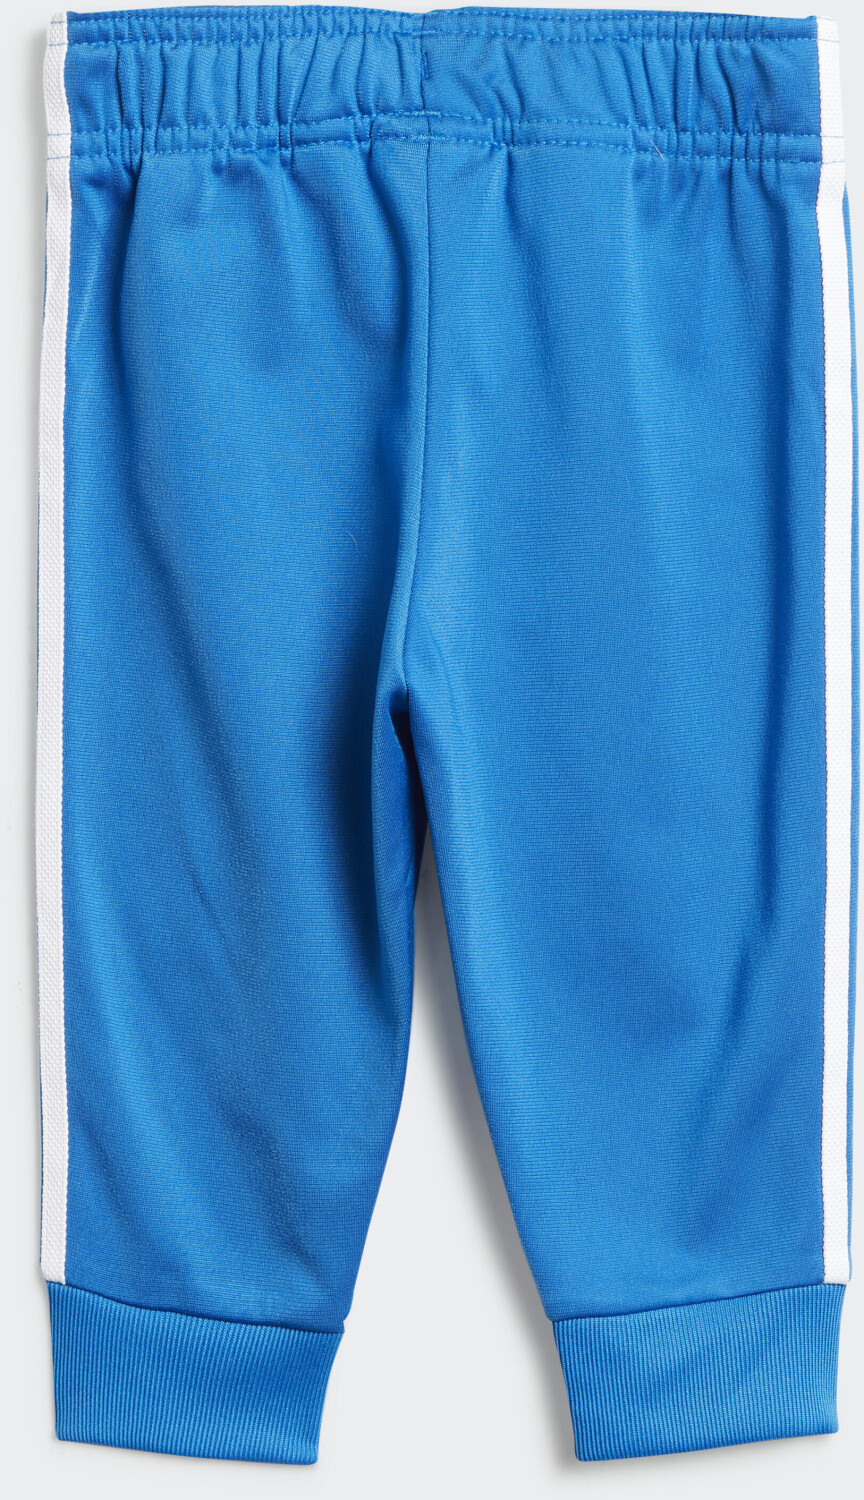 Adidas Kids Adicolor SST Track Suit blue bird (IP6696) ab € 40,41 |  Preisvergleich bei